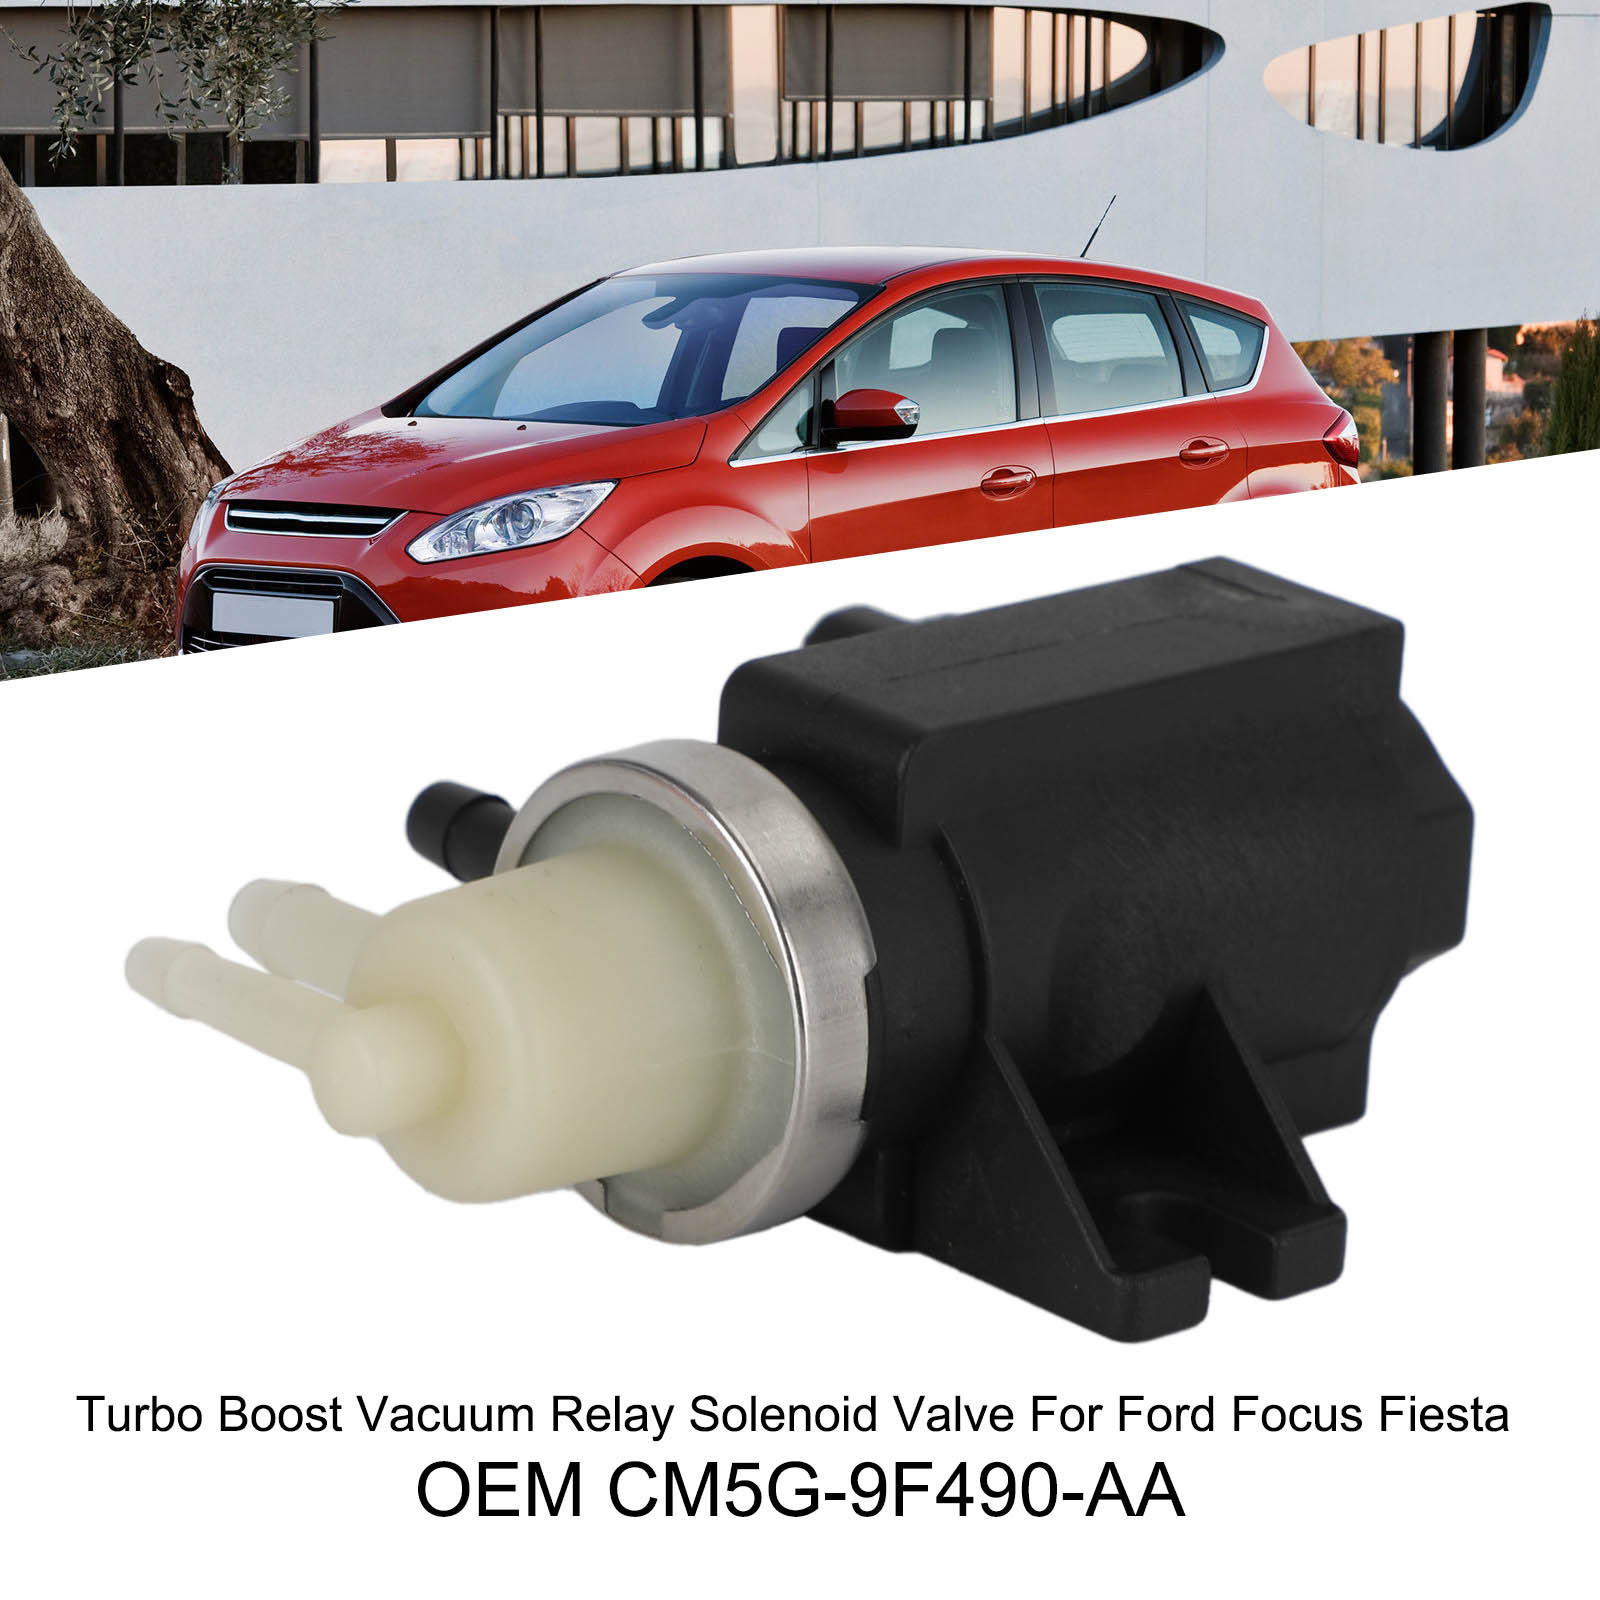 Ford Focus Fiesta CM5G-9F490-AA 渦輪增壓電磁閥-極限超快感